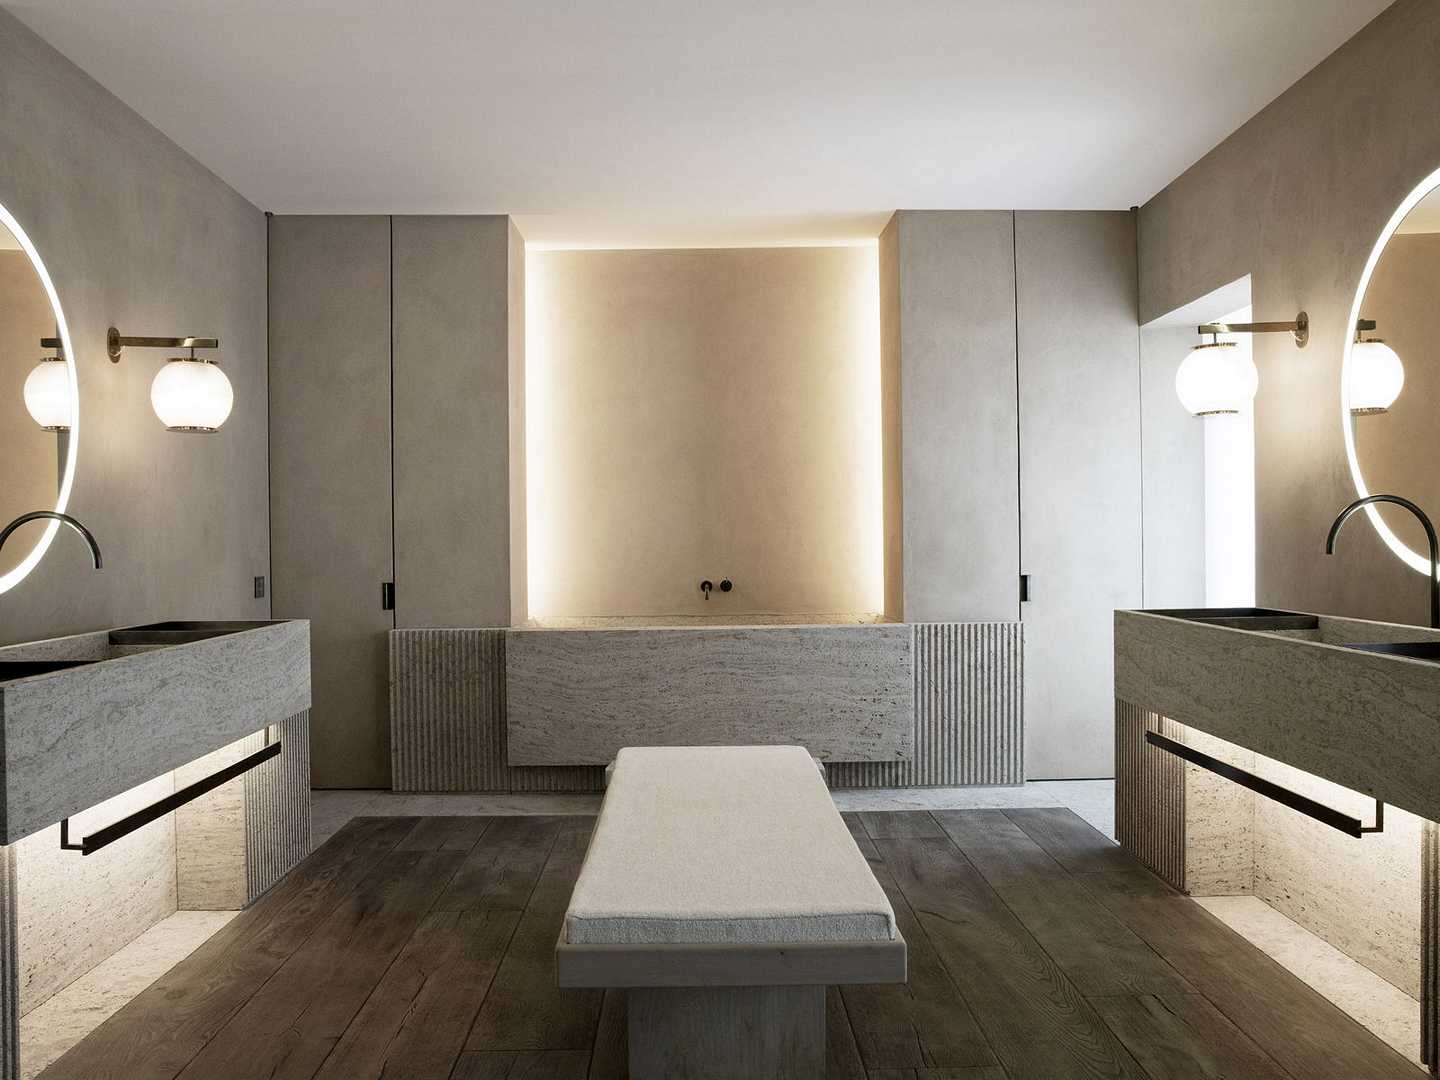 The Bath Salon by Nicolas Schuybroek Architects